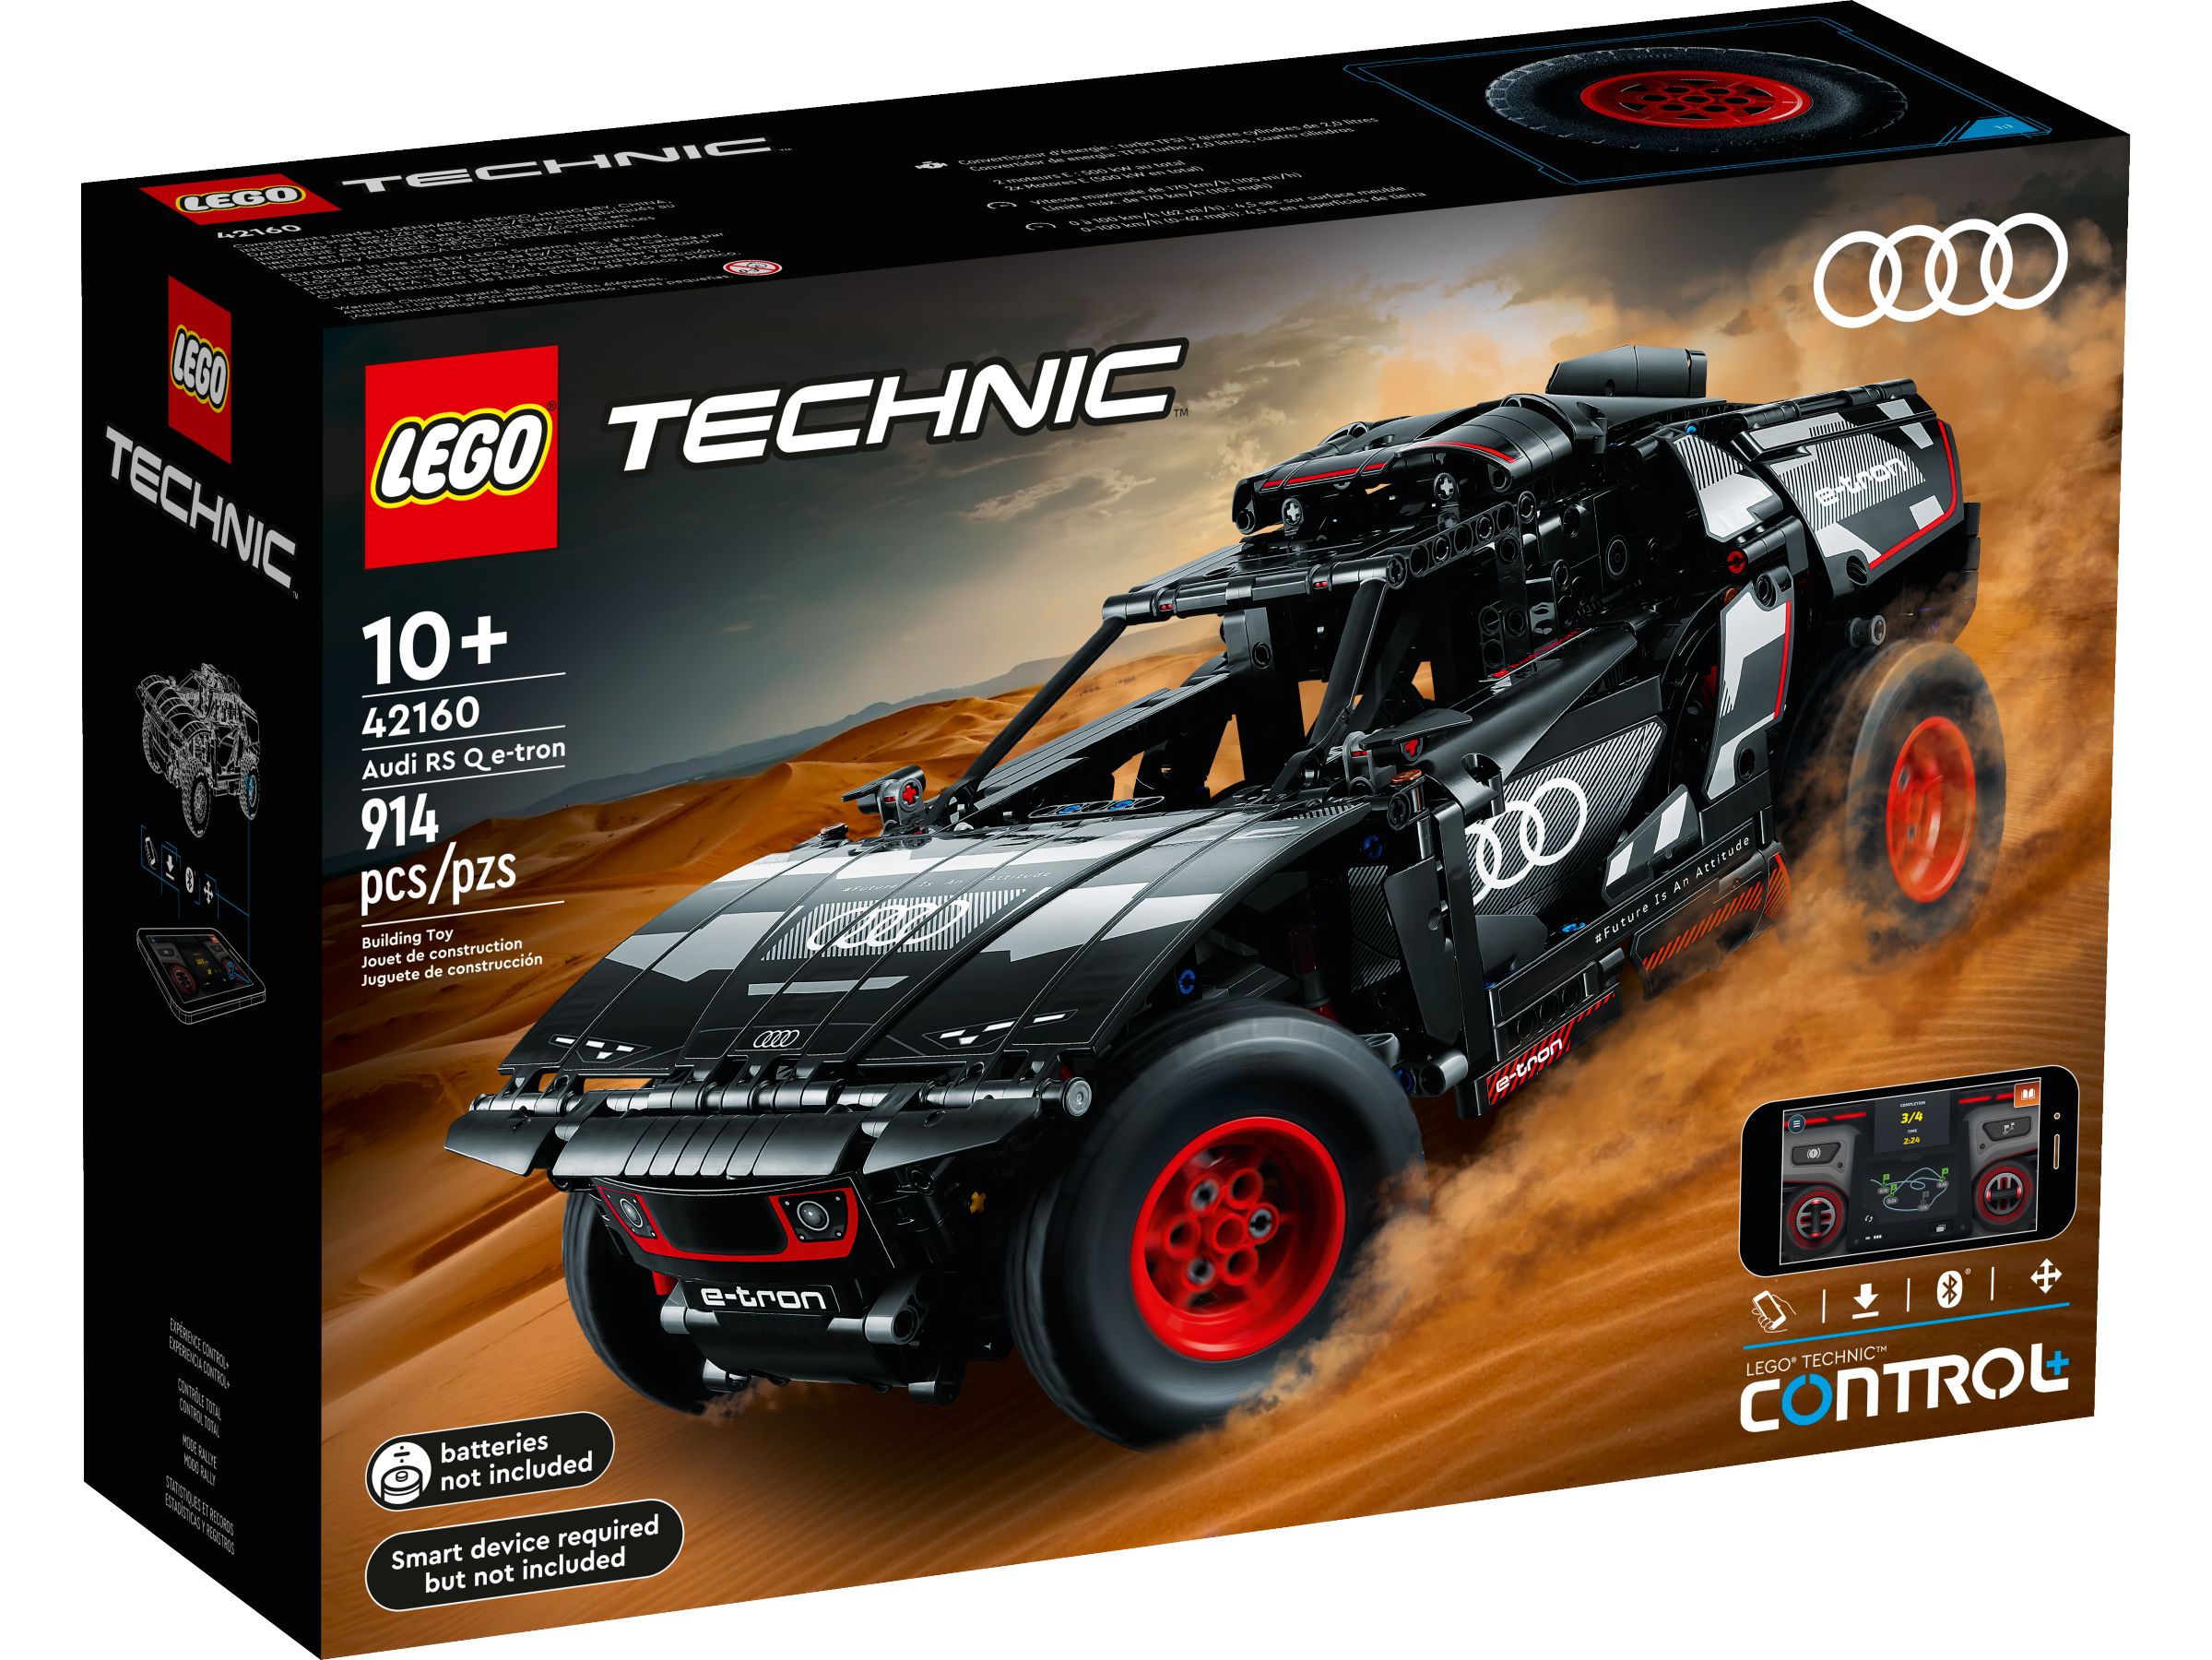 LEGO Technic 42160 Audi RS Q e-tron LEGO_42160_Box1_v39.jpg